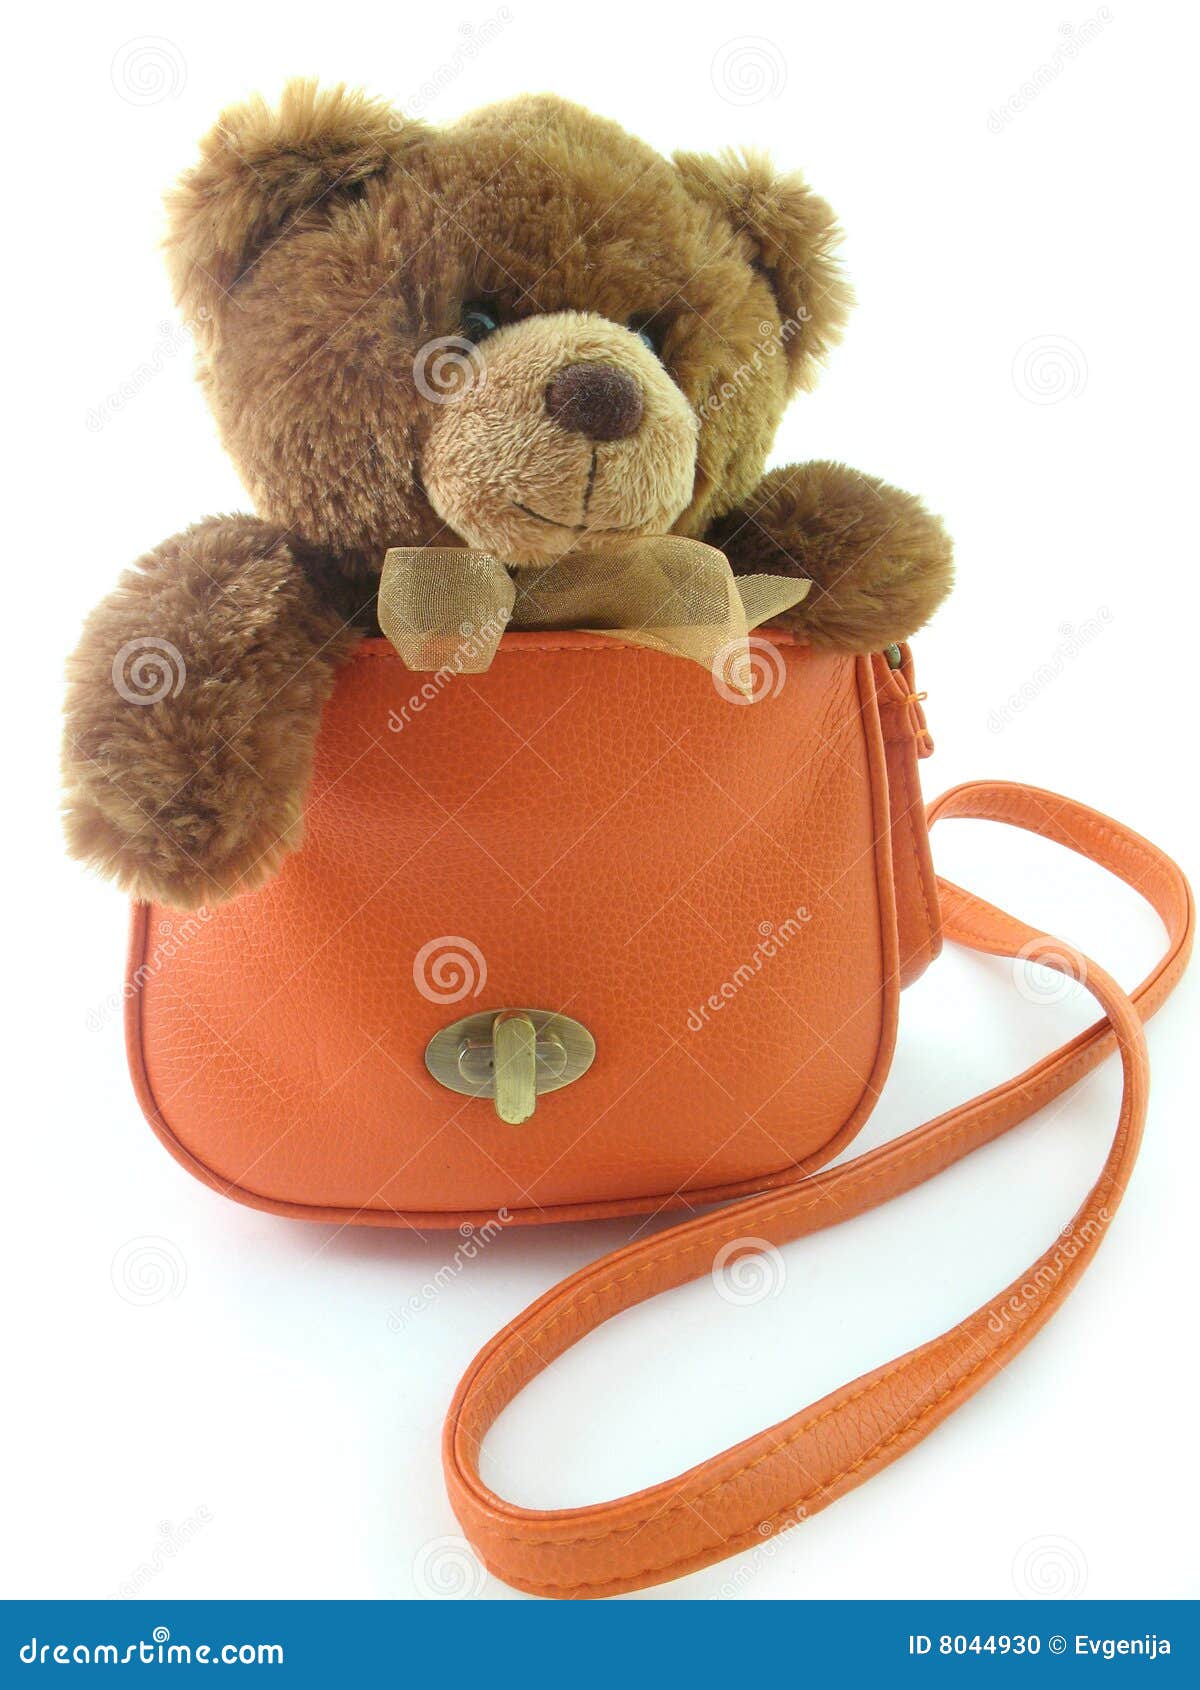 Teddy bear in a bag stock photo. Image 